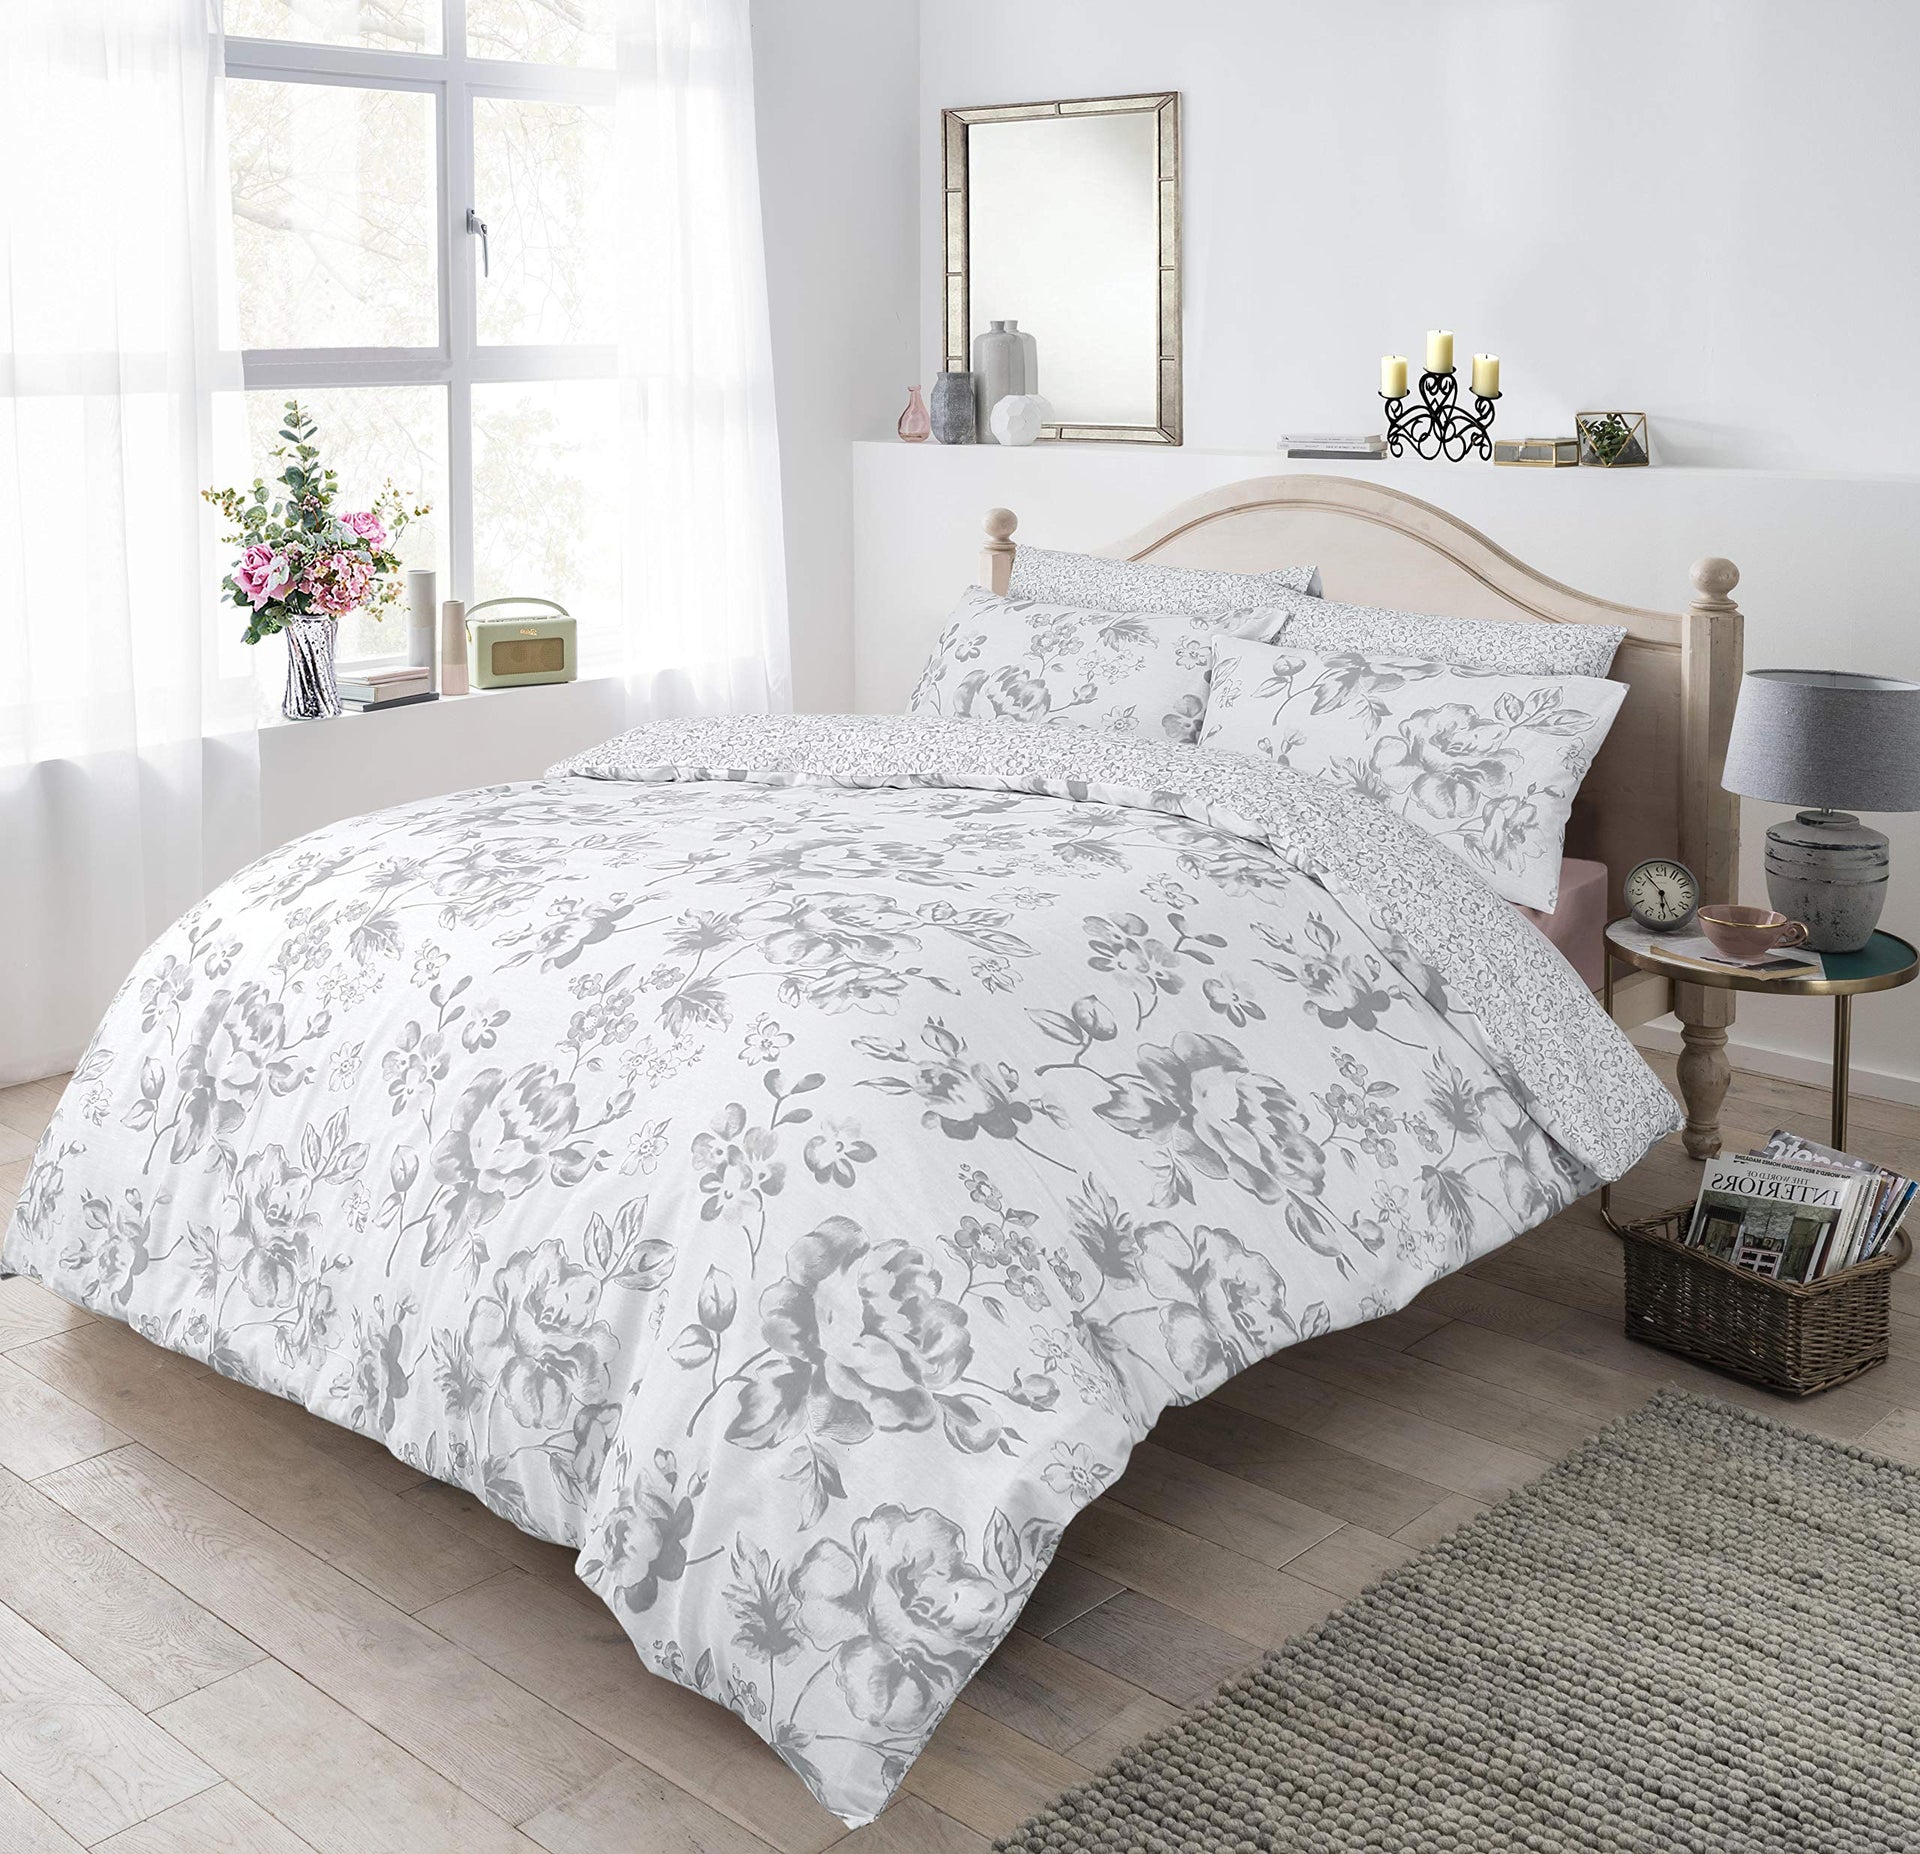 GC GAVENO CAVAILIA Marble Duvet Cover Single, Reversible Polycotton  Textured Bedding Sets With Pillowcase, White